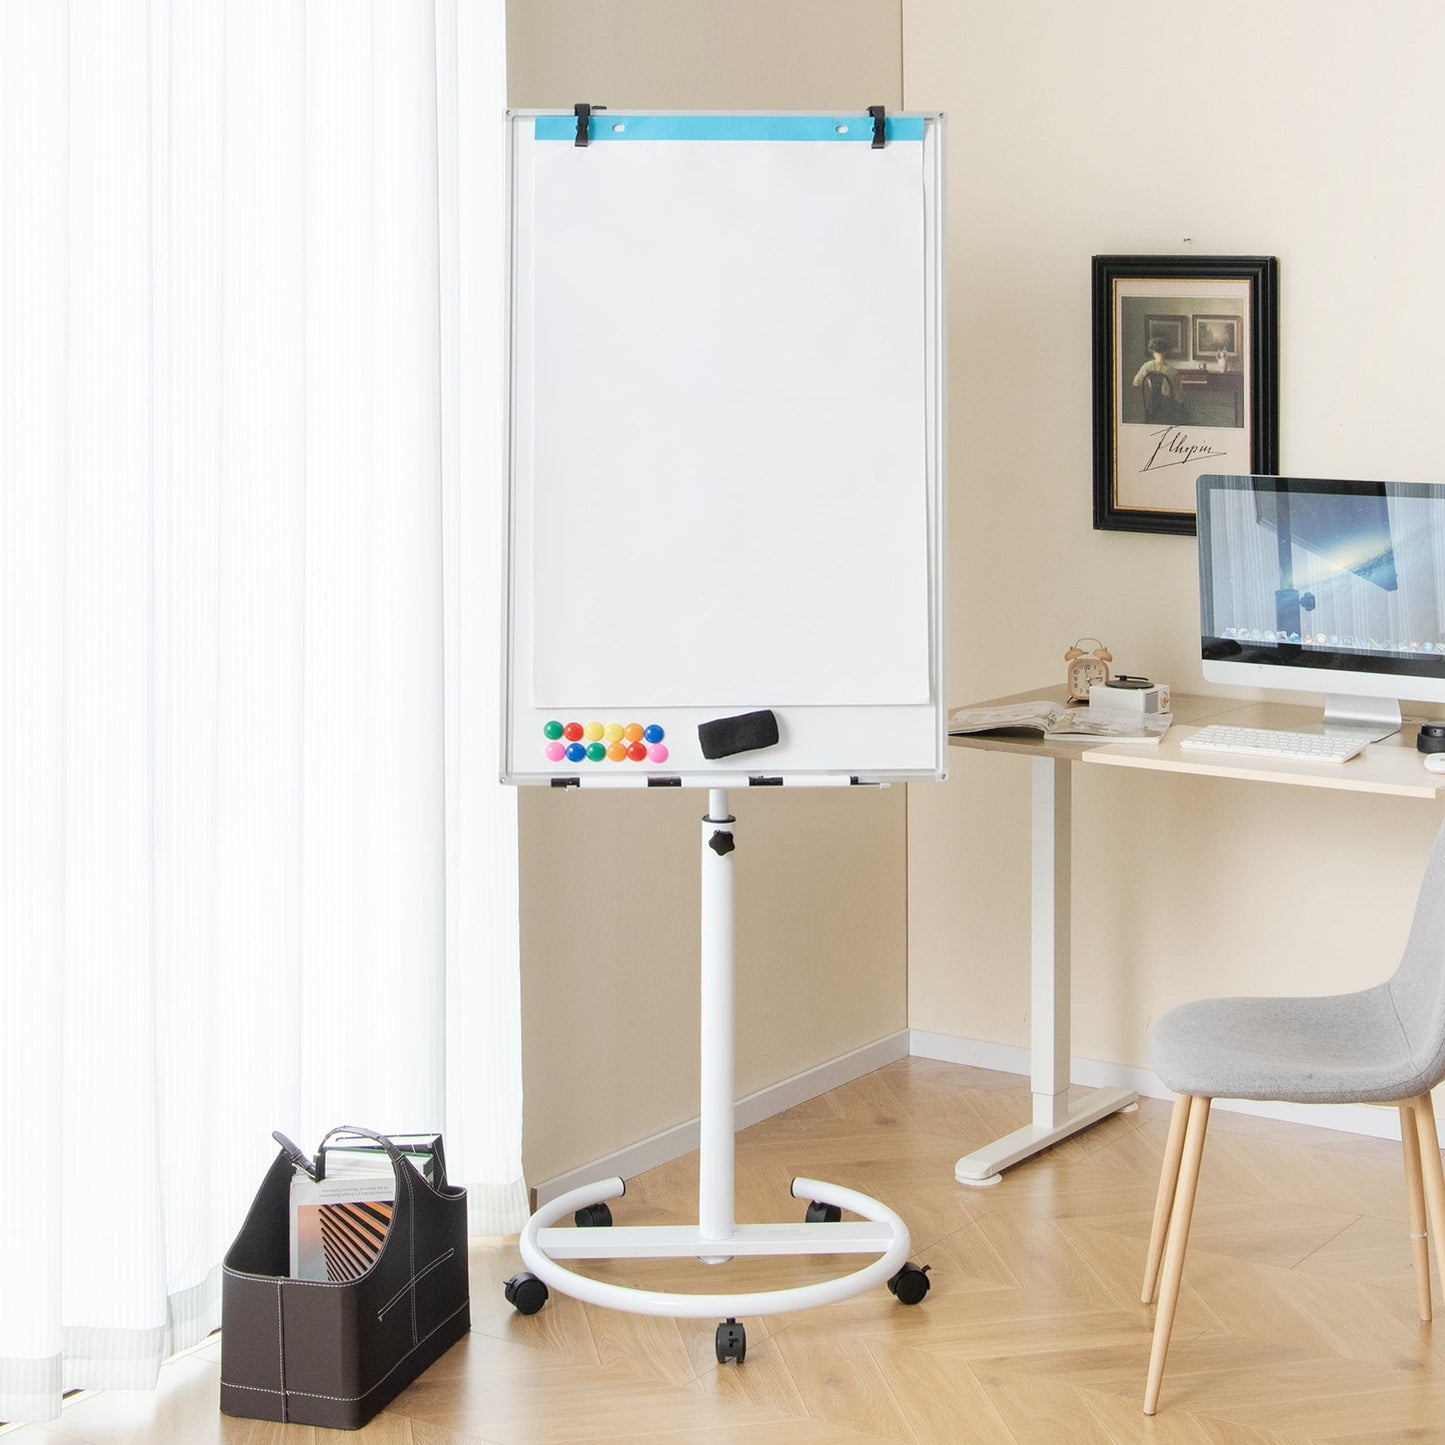 100 cm x 65 cm Height-Adjustable Magnetic Whiteboard on Wheels-White